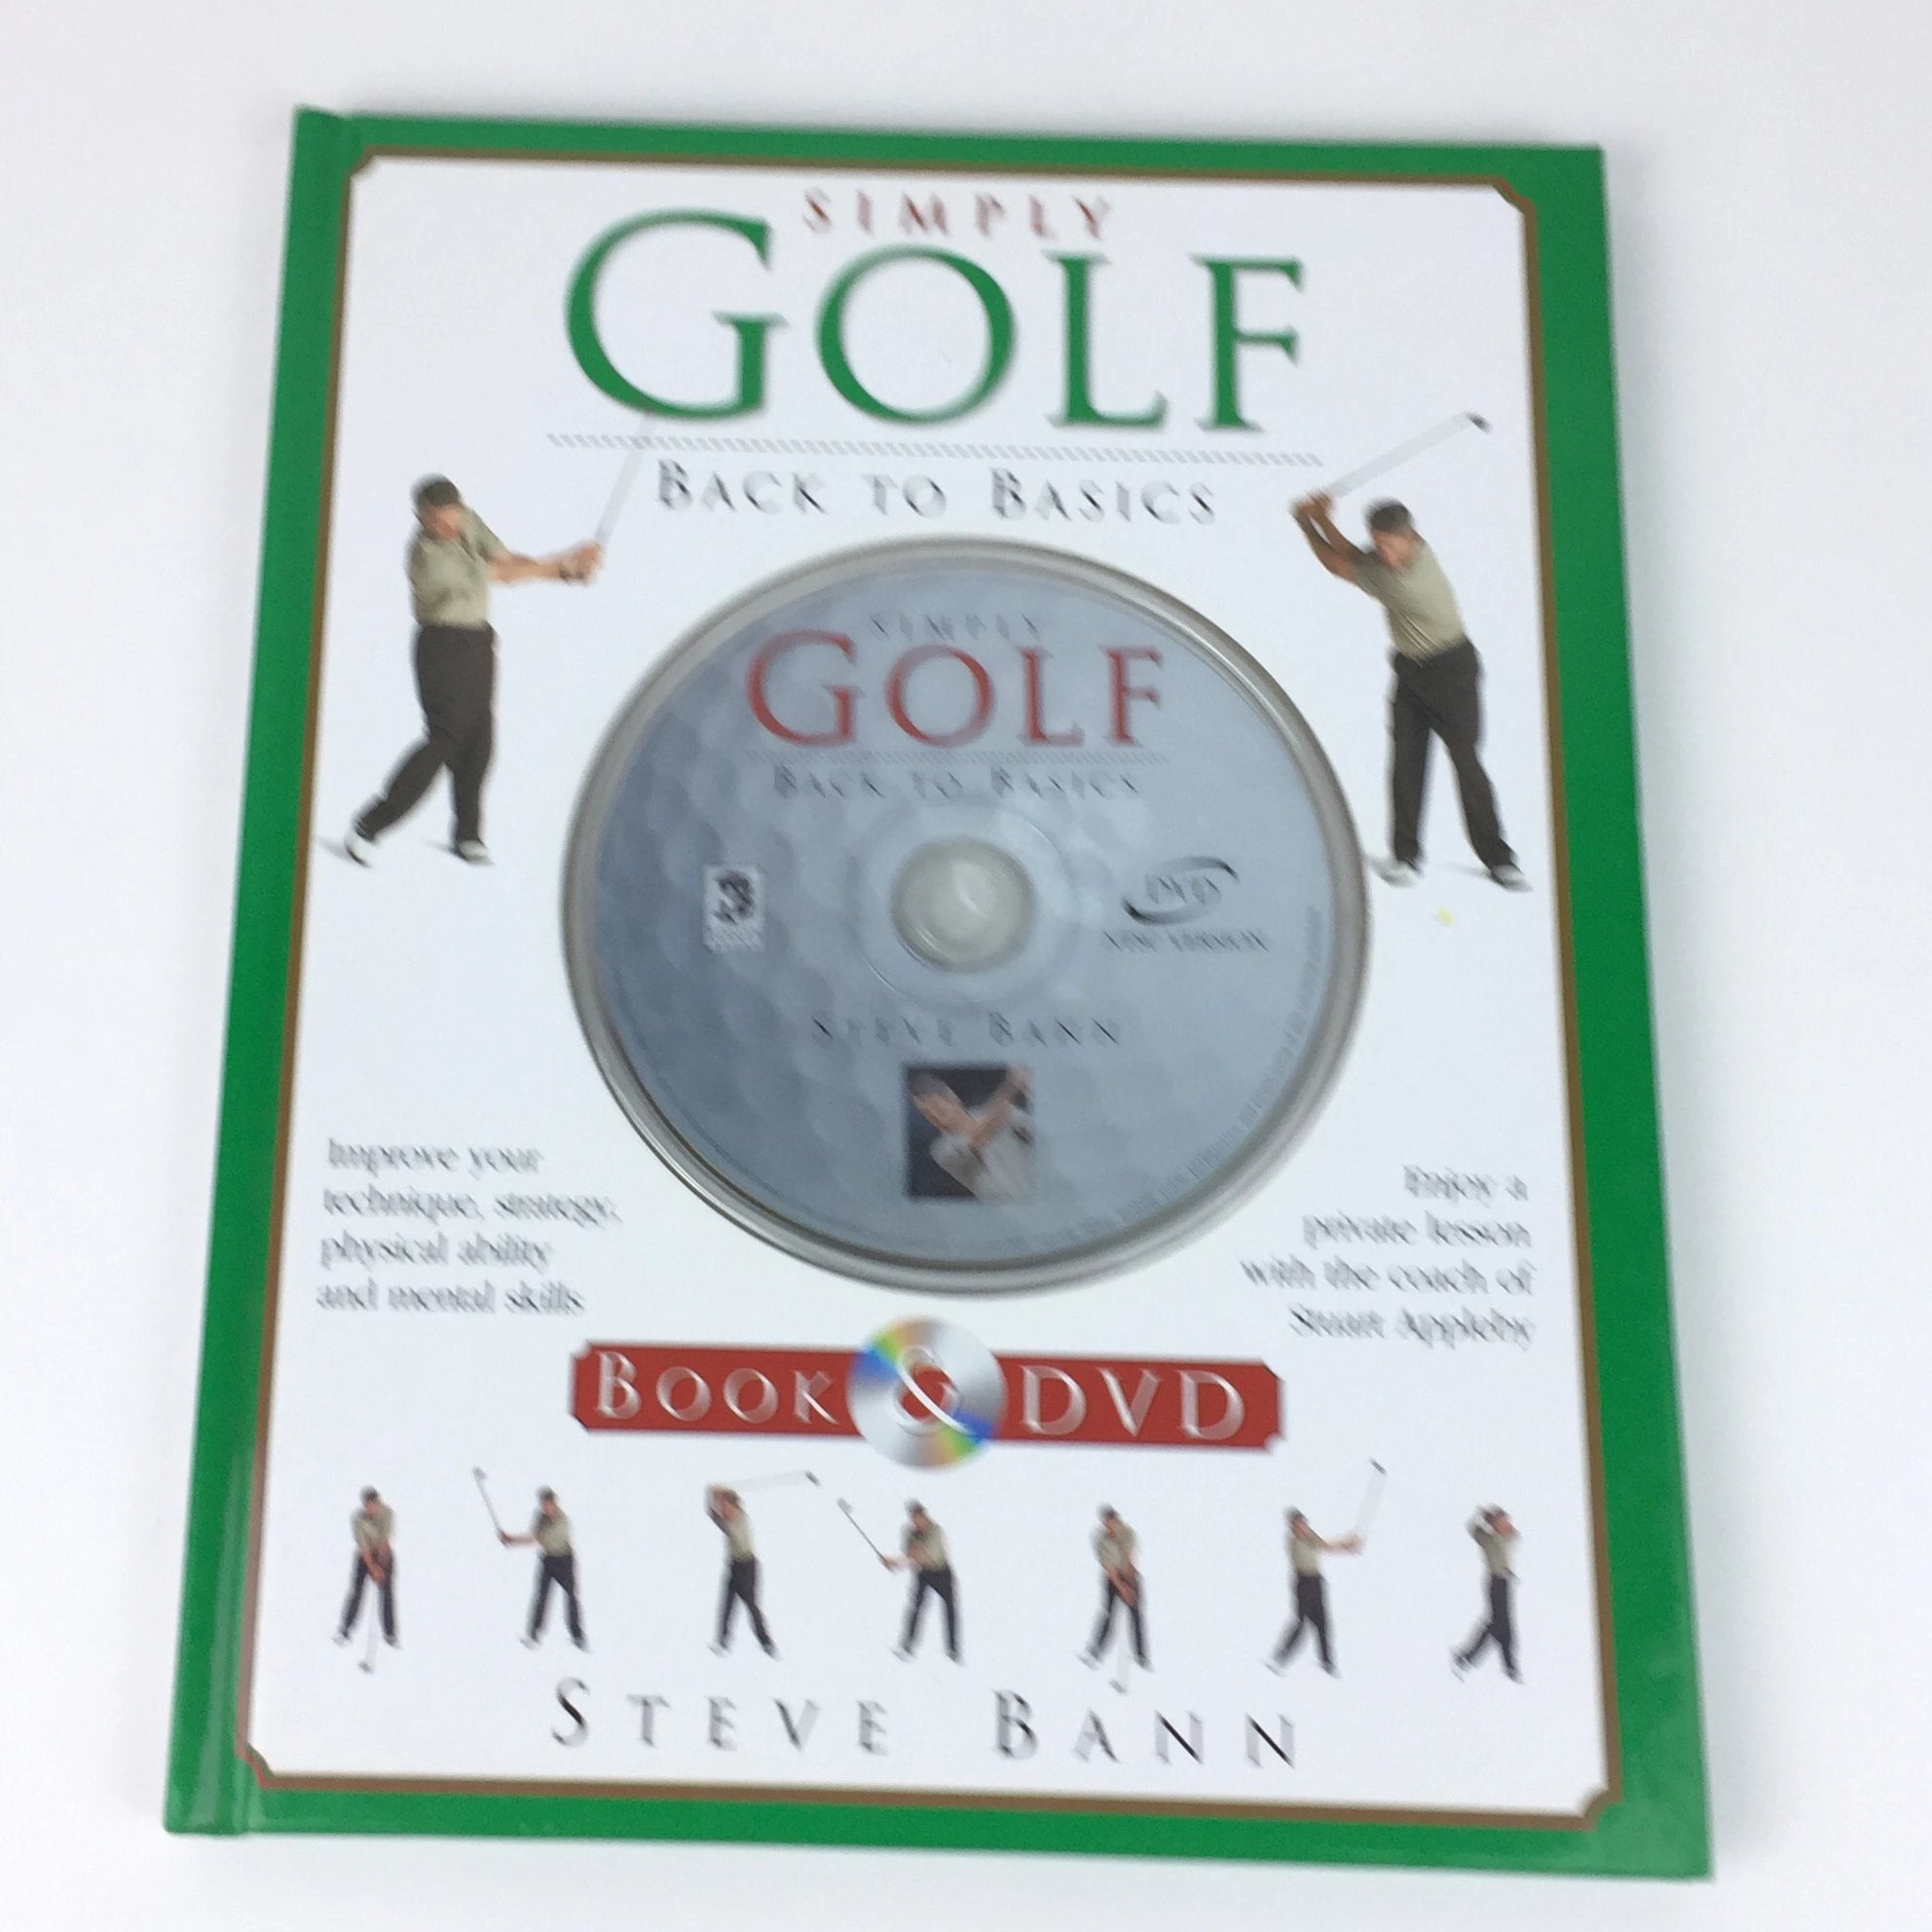 Simply Golf: Back to Basics by Steve Bann